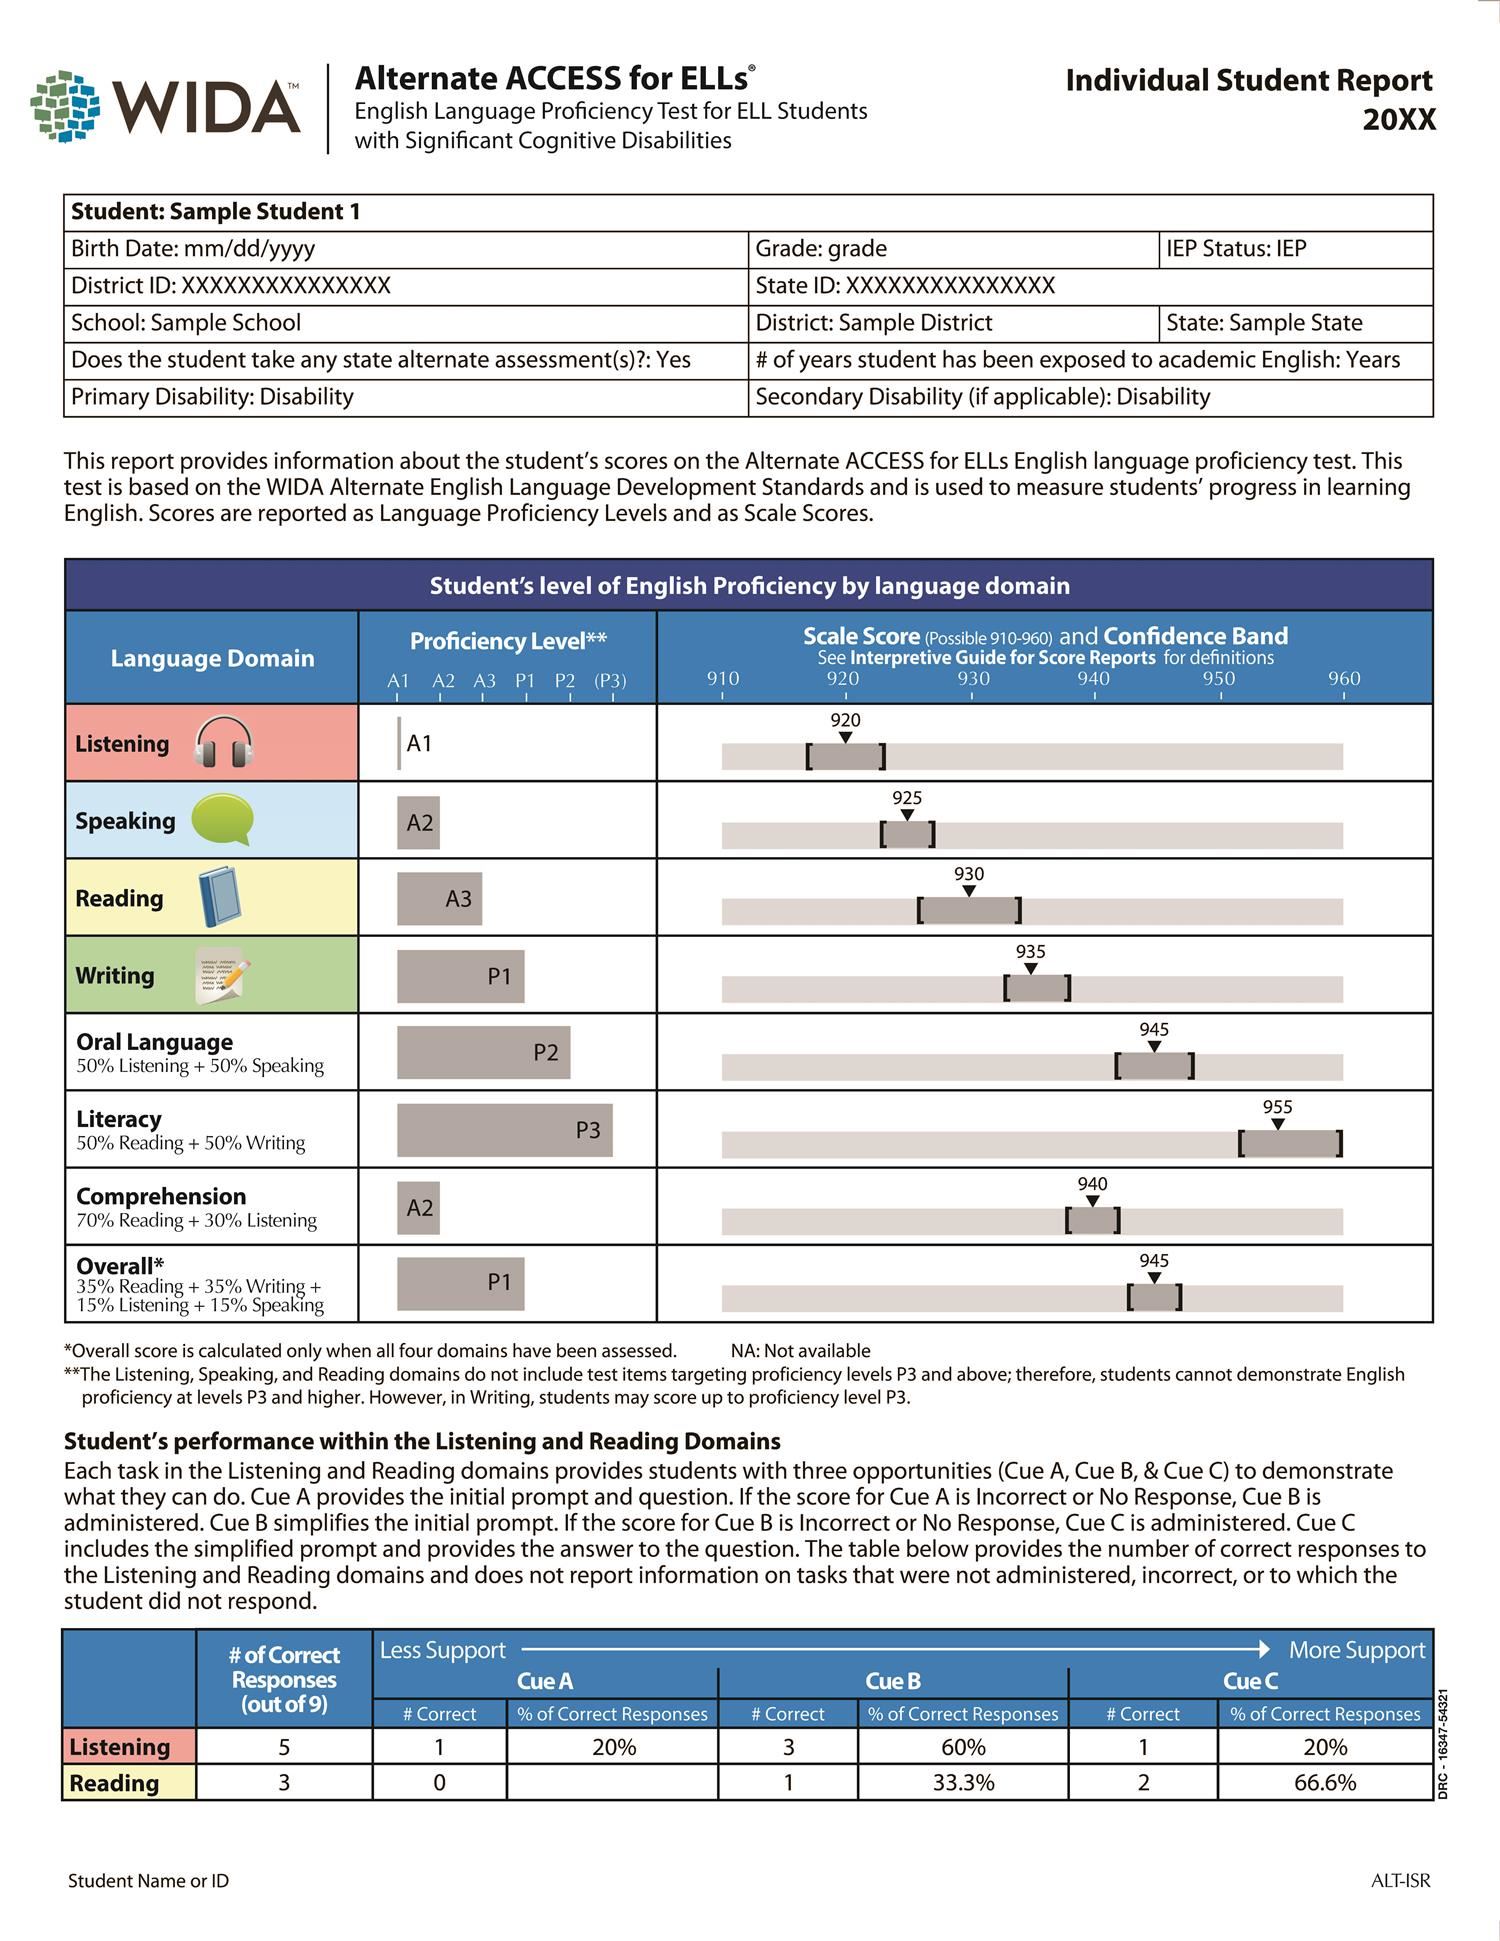 Sample Student Score Report -Alternate ACCESS English